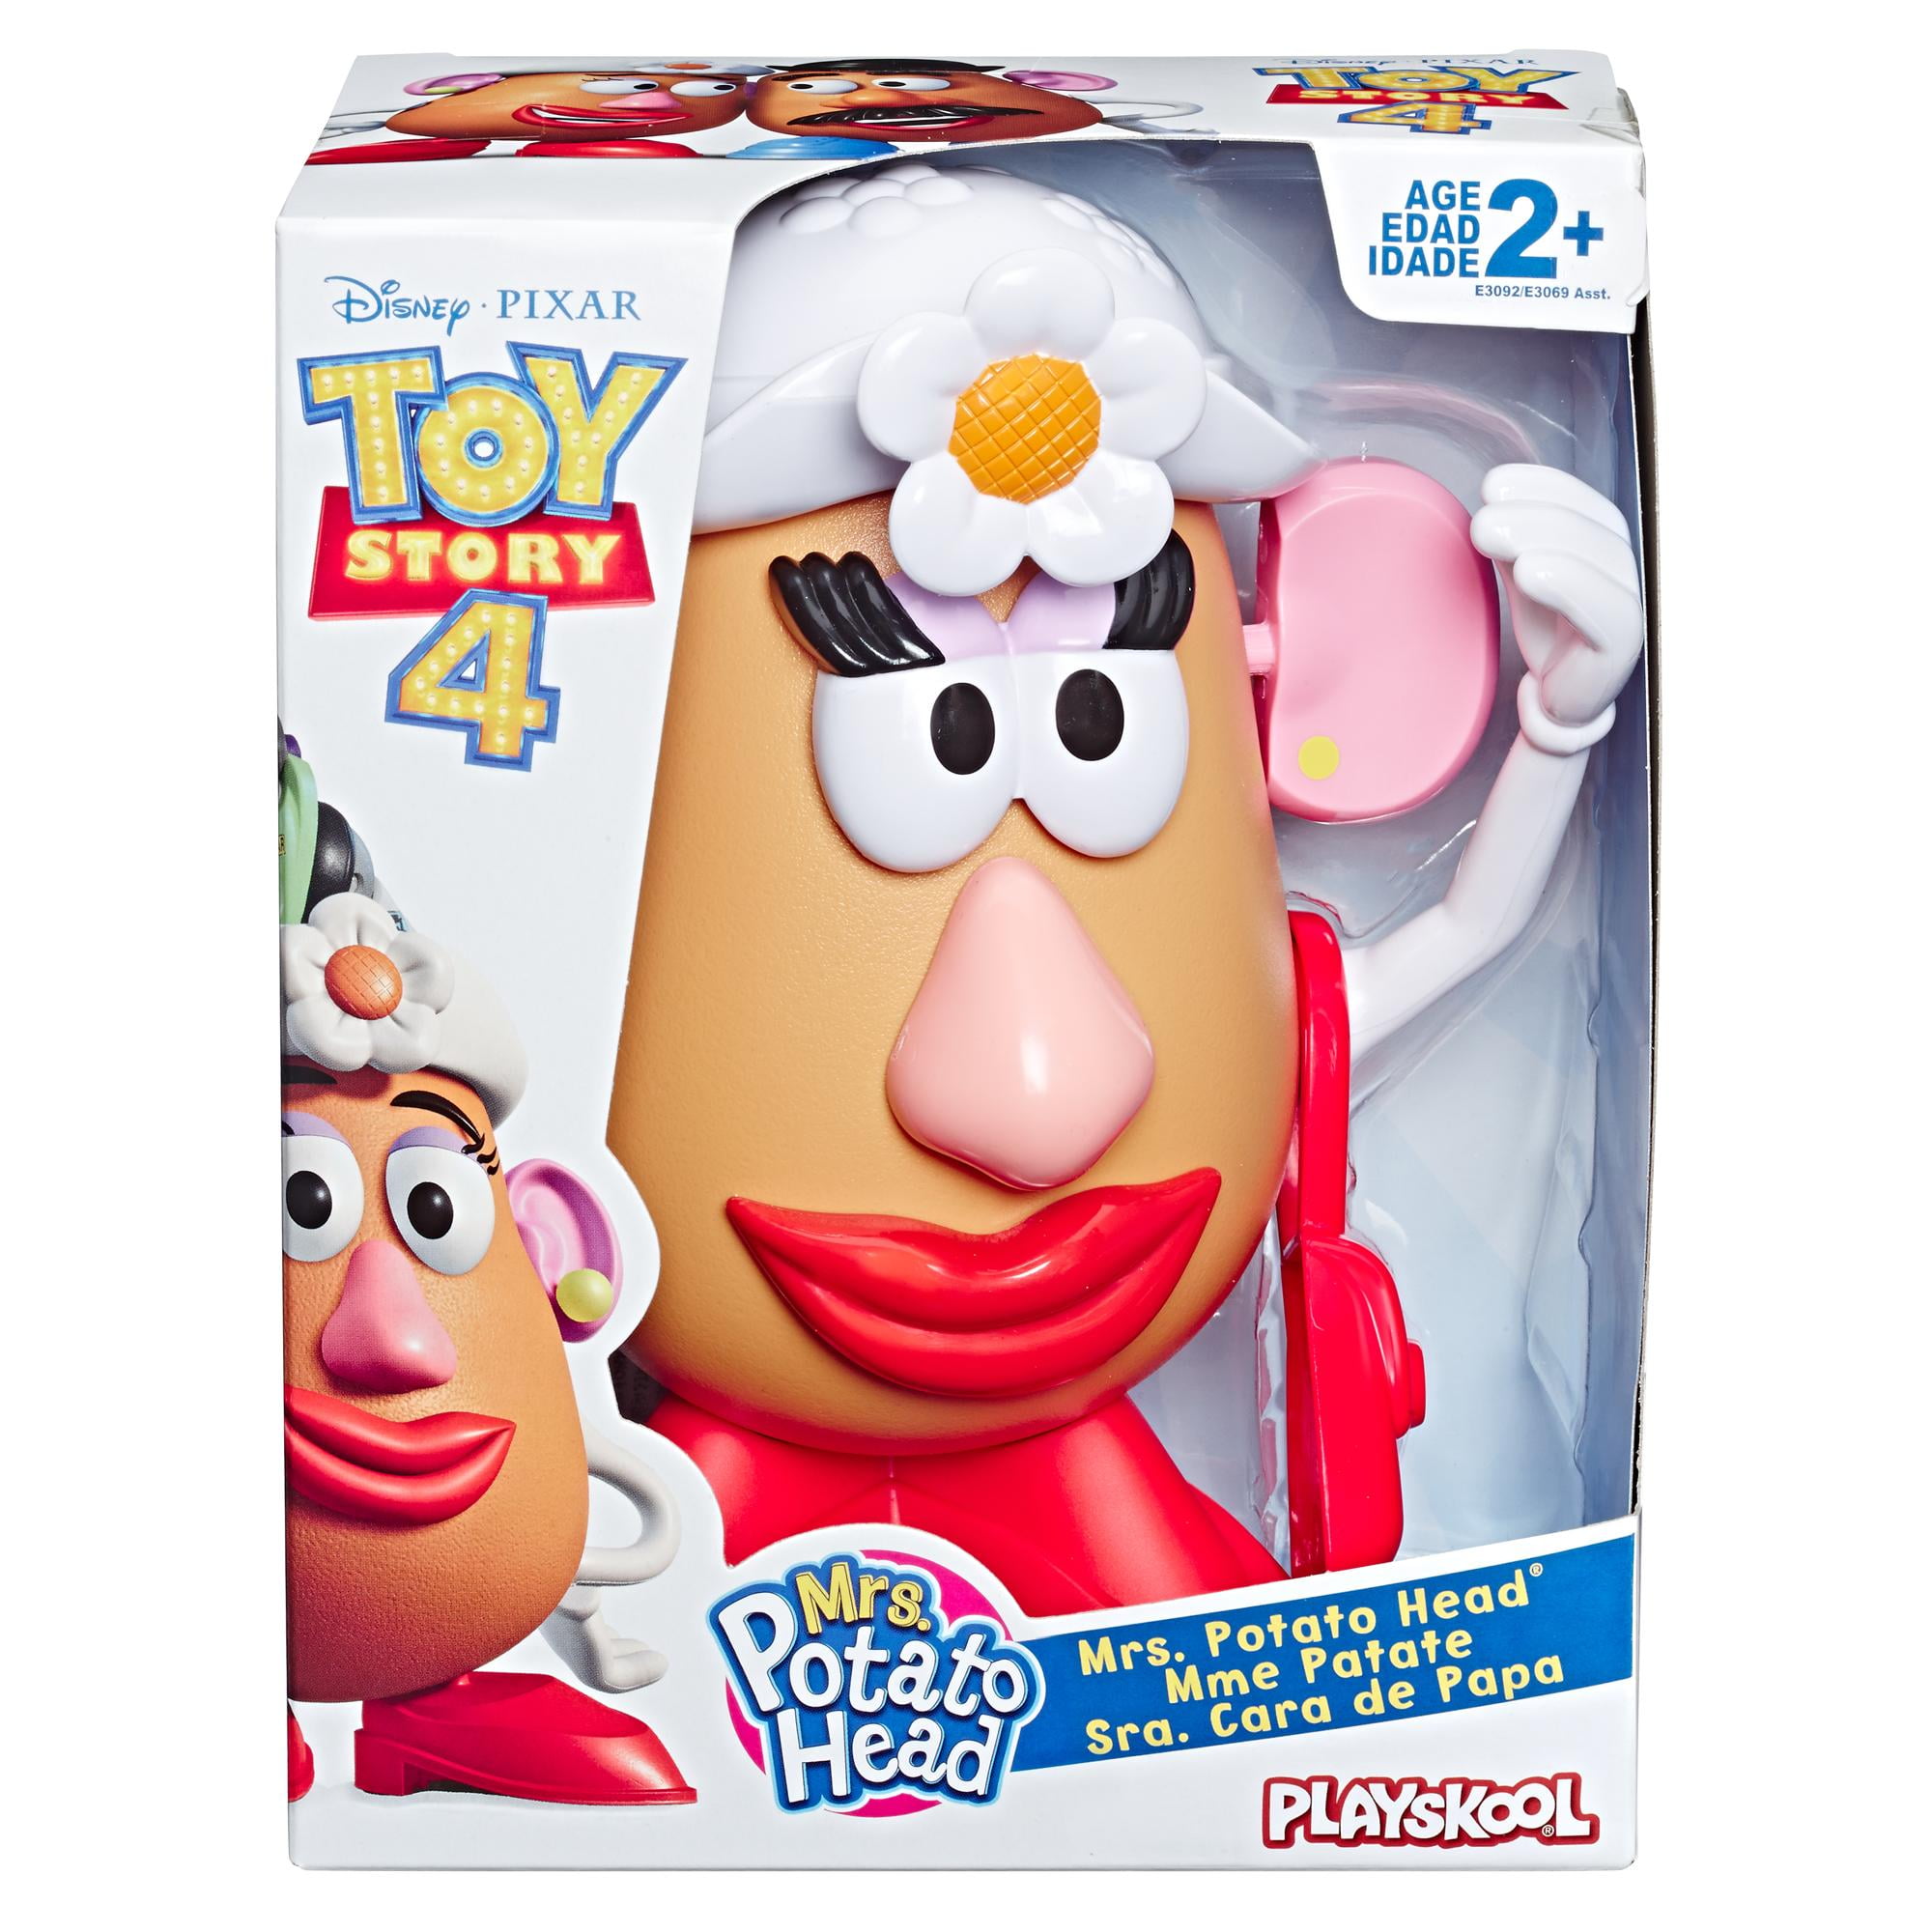 Disney Pixar Toy Story 4 Mrs. Potato Head Kids Toy For Boys and Girls 